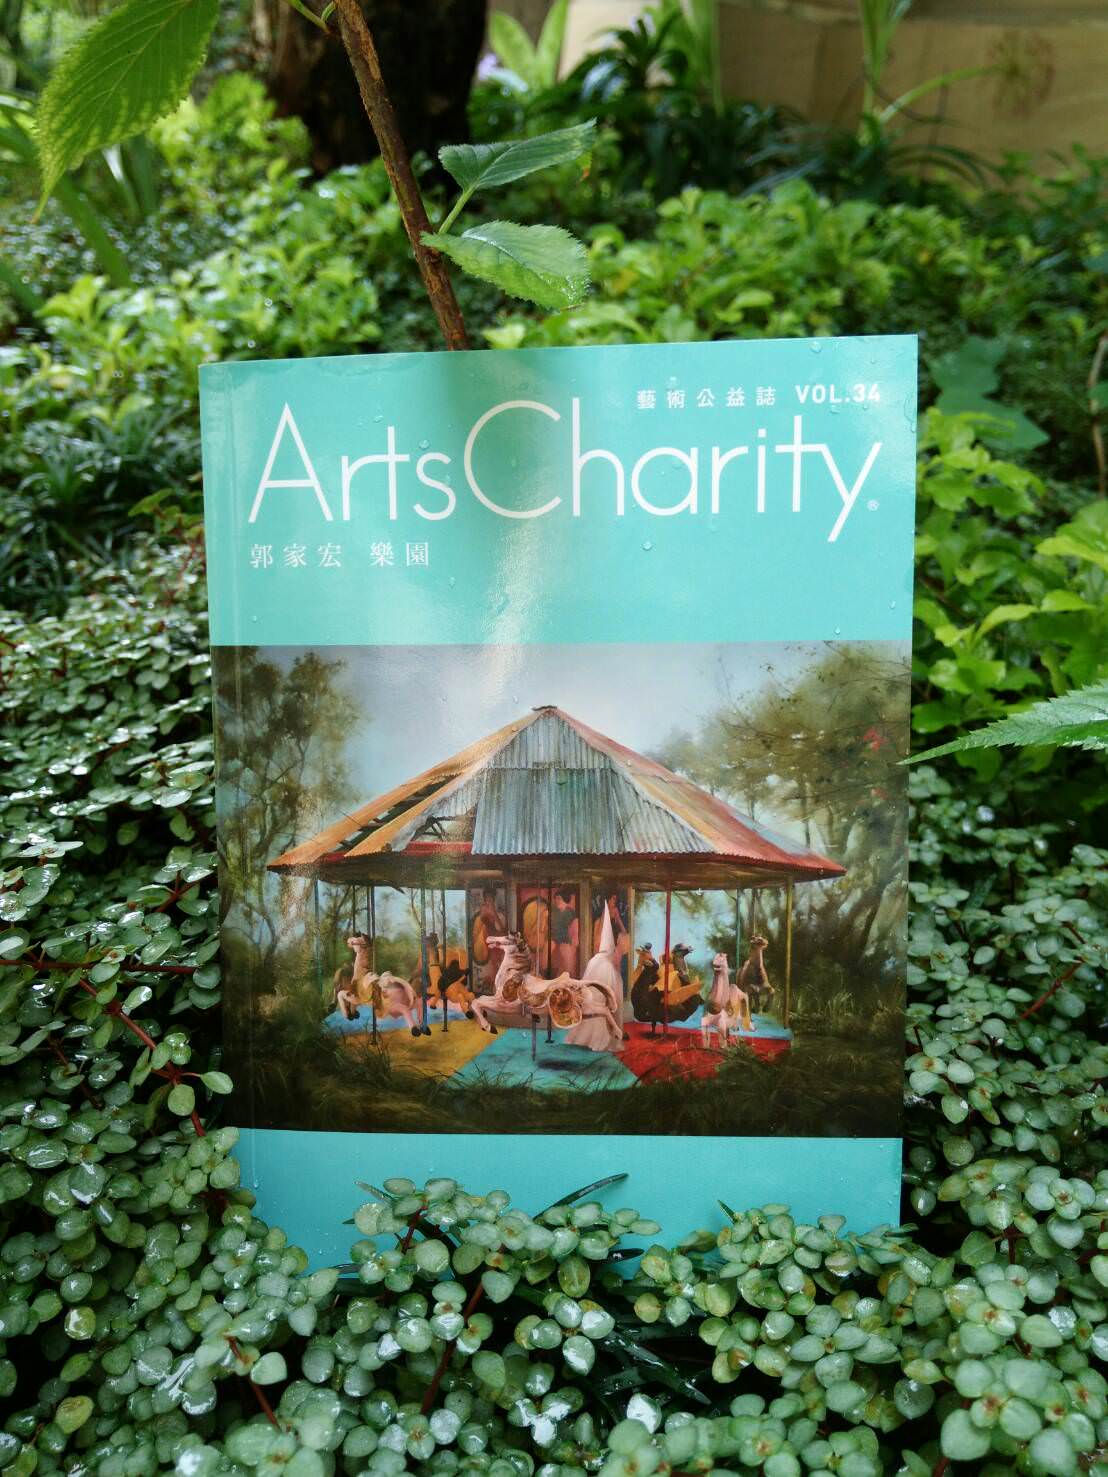 感謝「Arts Charity」藝術公益誌VOL.34號報導